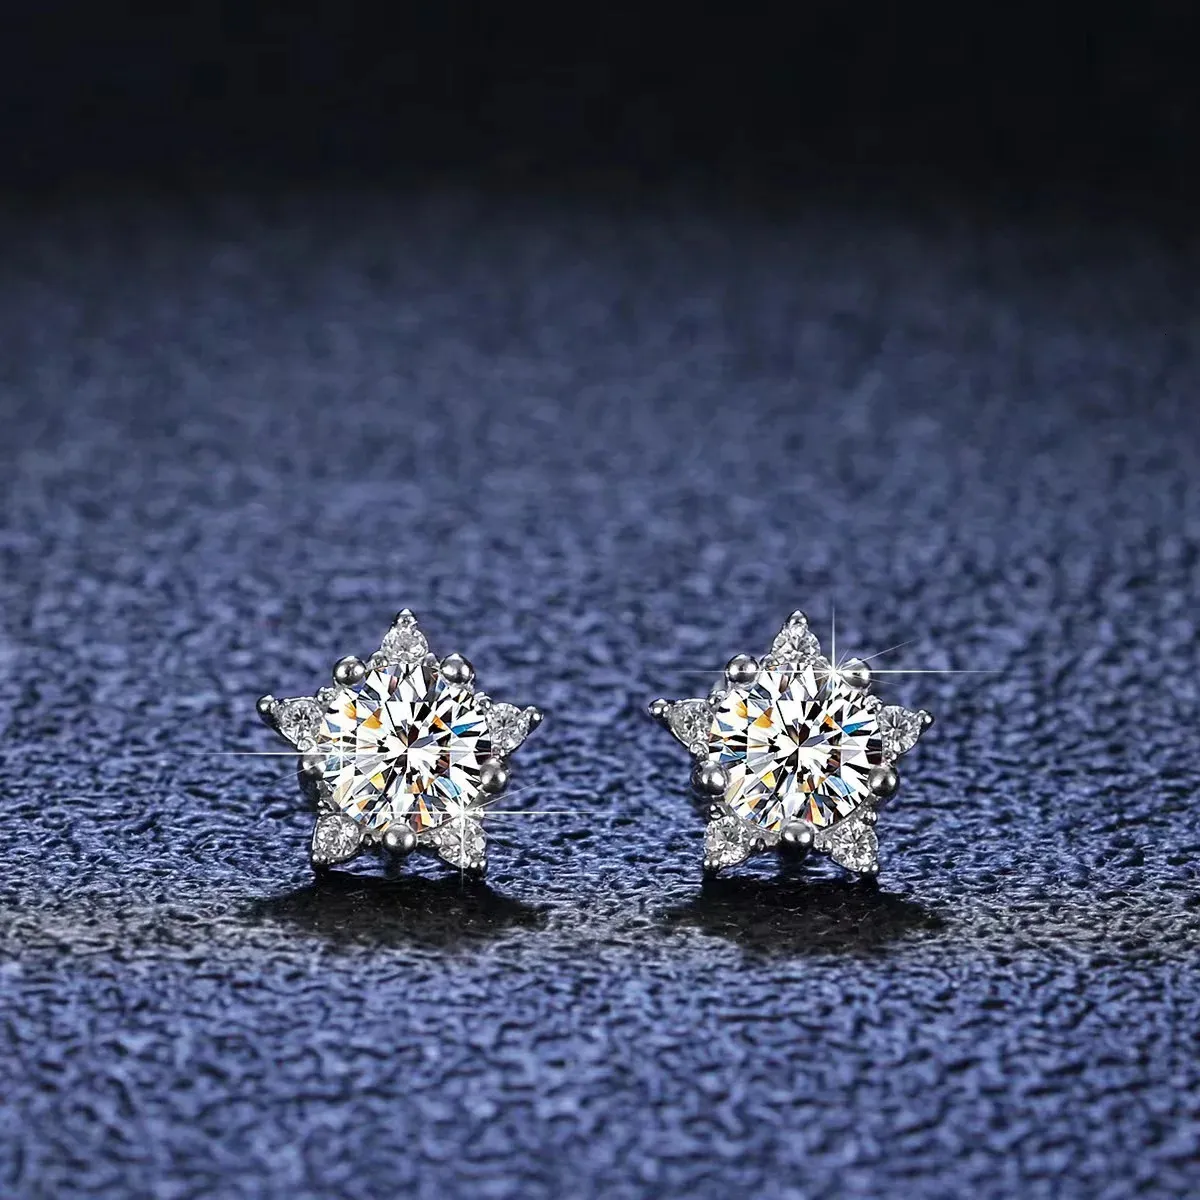 Quke Real Diamond Star Stud Earrings 05ct D Color VVS1 Pure 925 Sterling Silver For Women Wedding Fine Jewelry EA012 240109